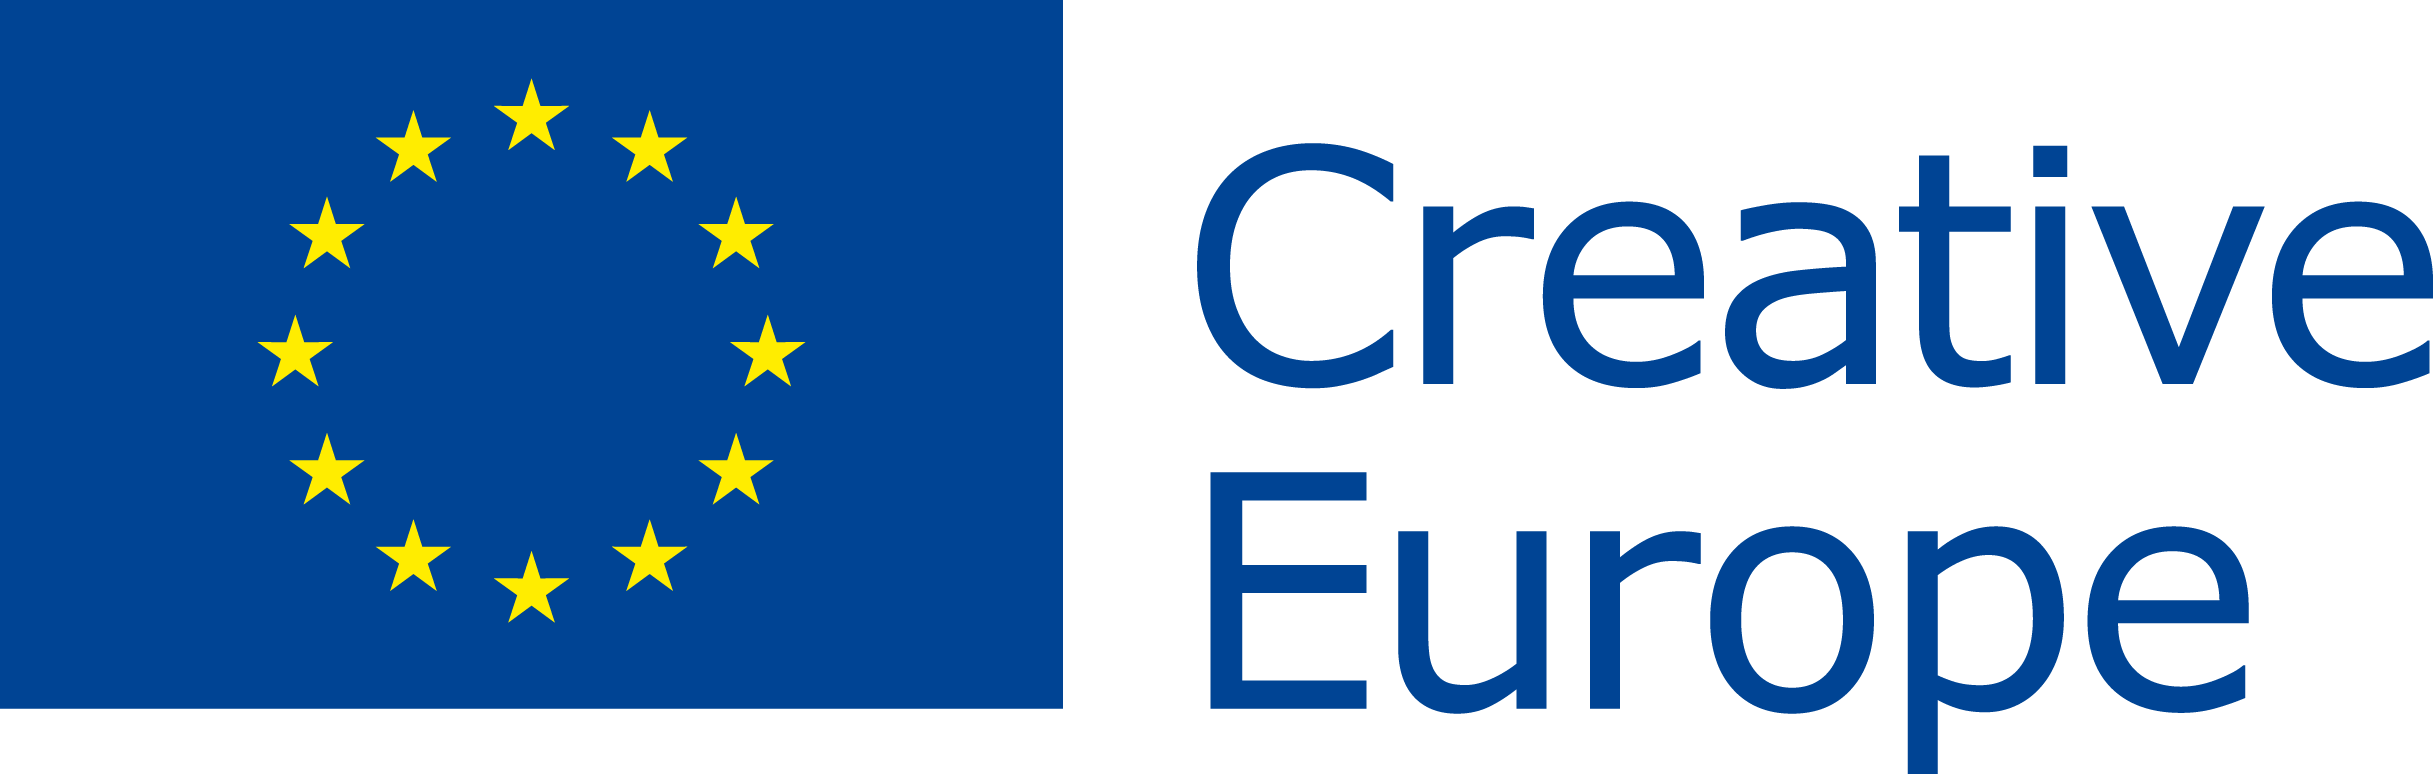 Europe Logo - File:Creative Europe logo.png - Wikimedia Commons